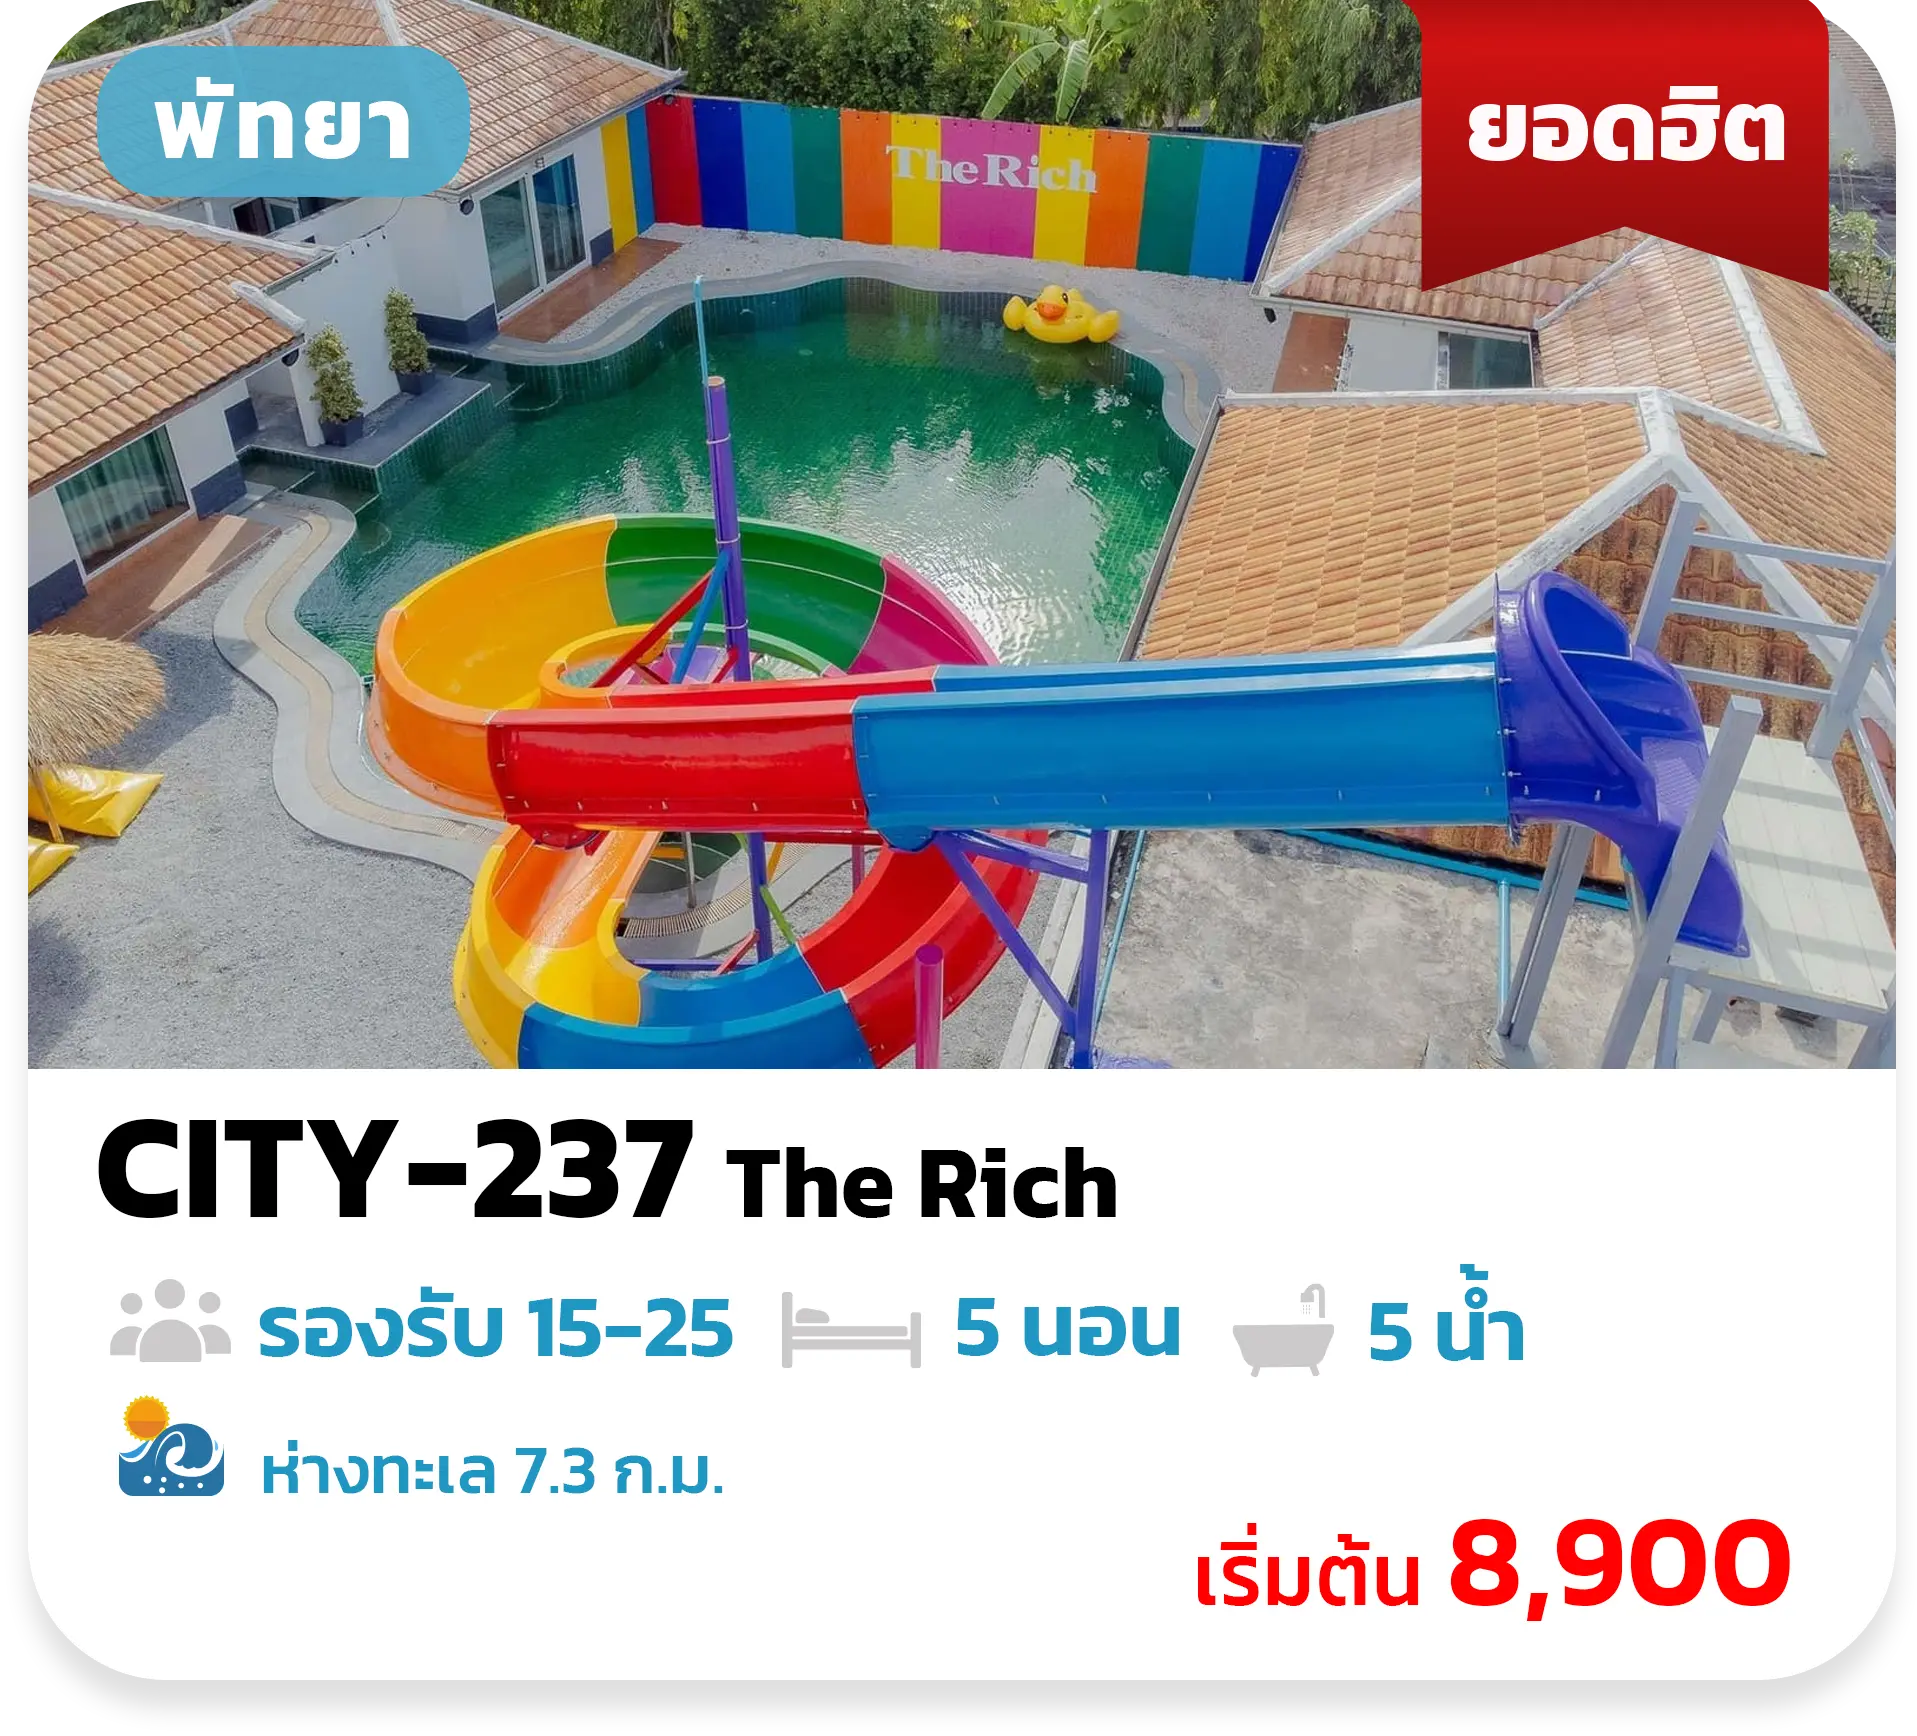 CITY 237 The Rich